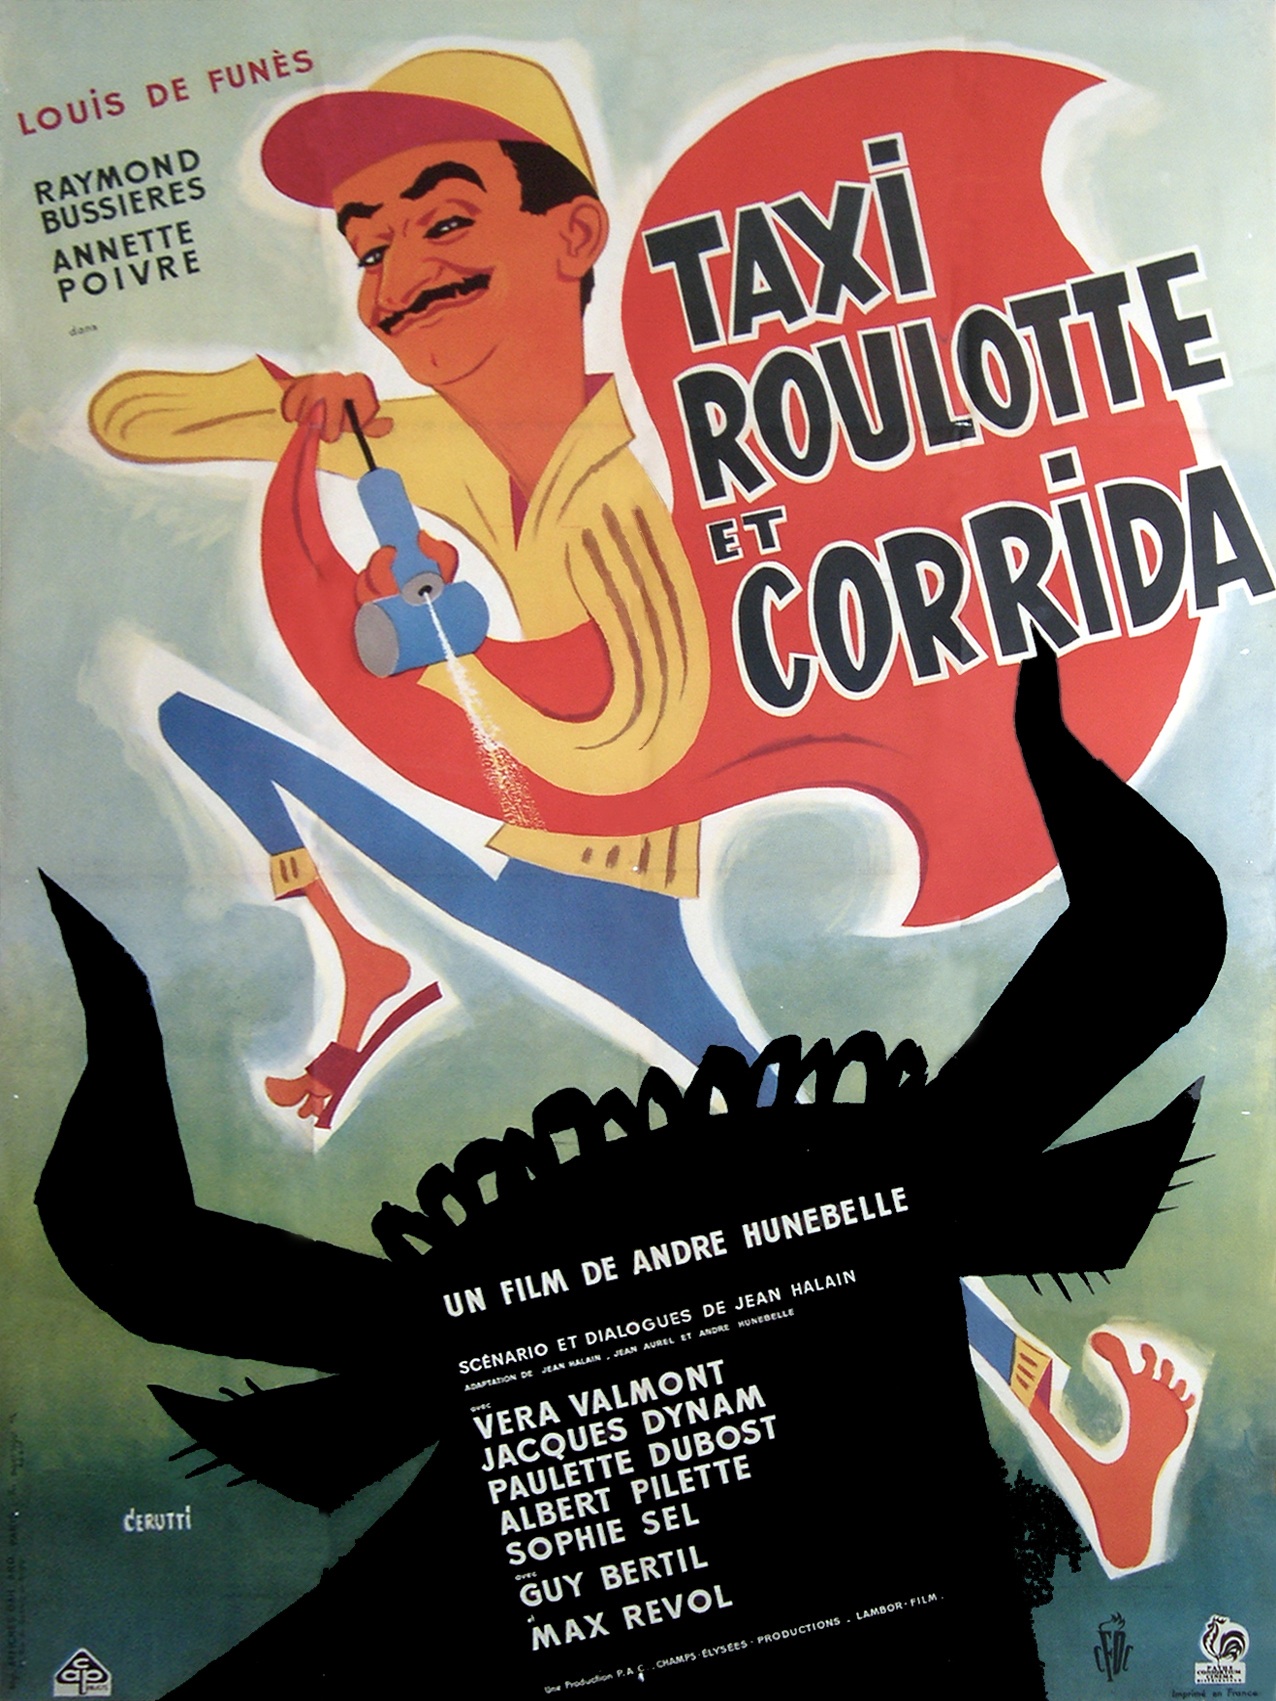 Taxi, Trailer and Corrida